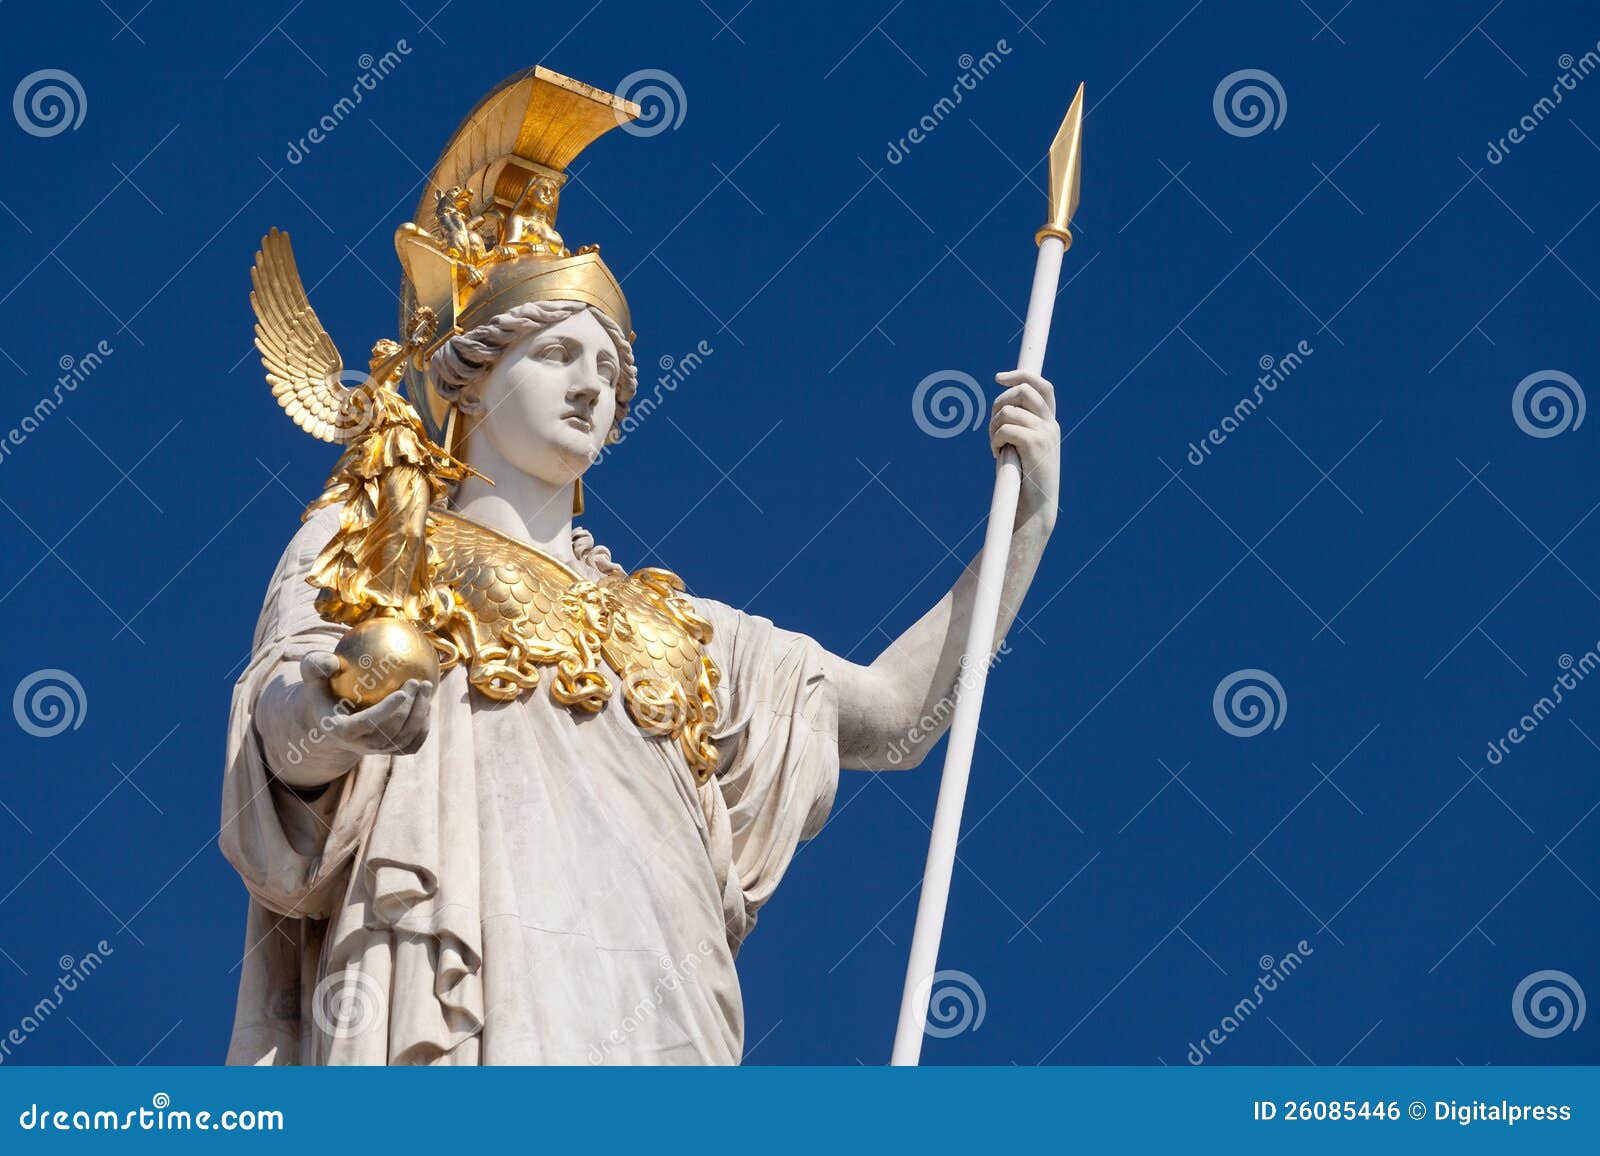 athena, goddess of greek mythology